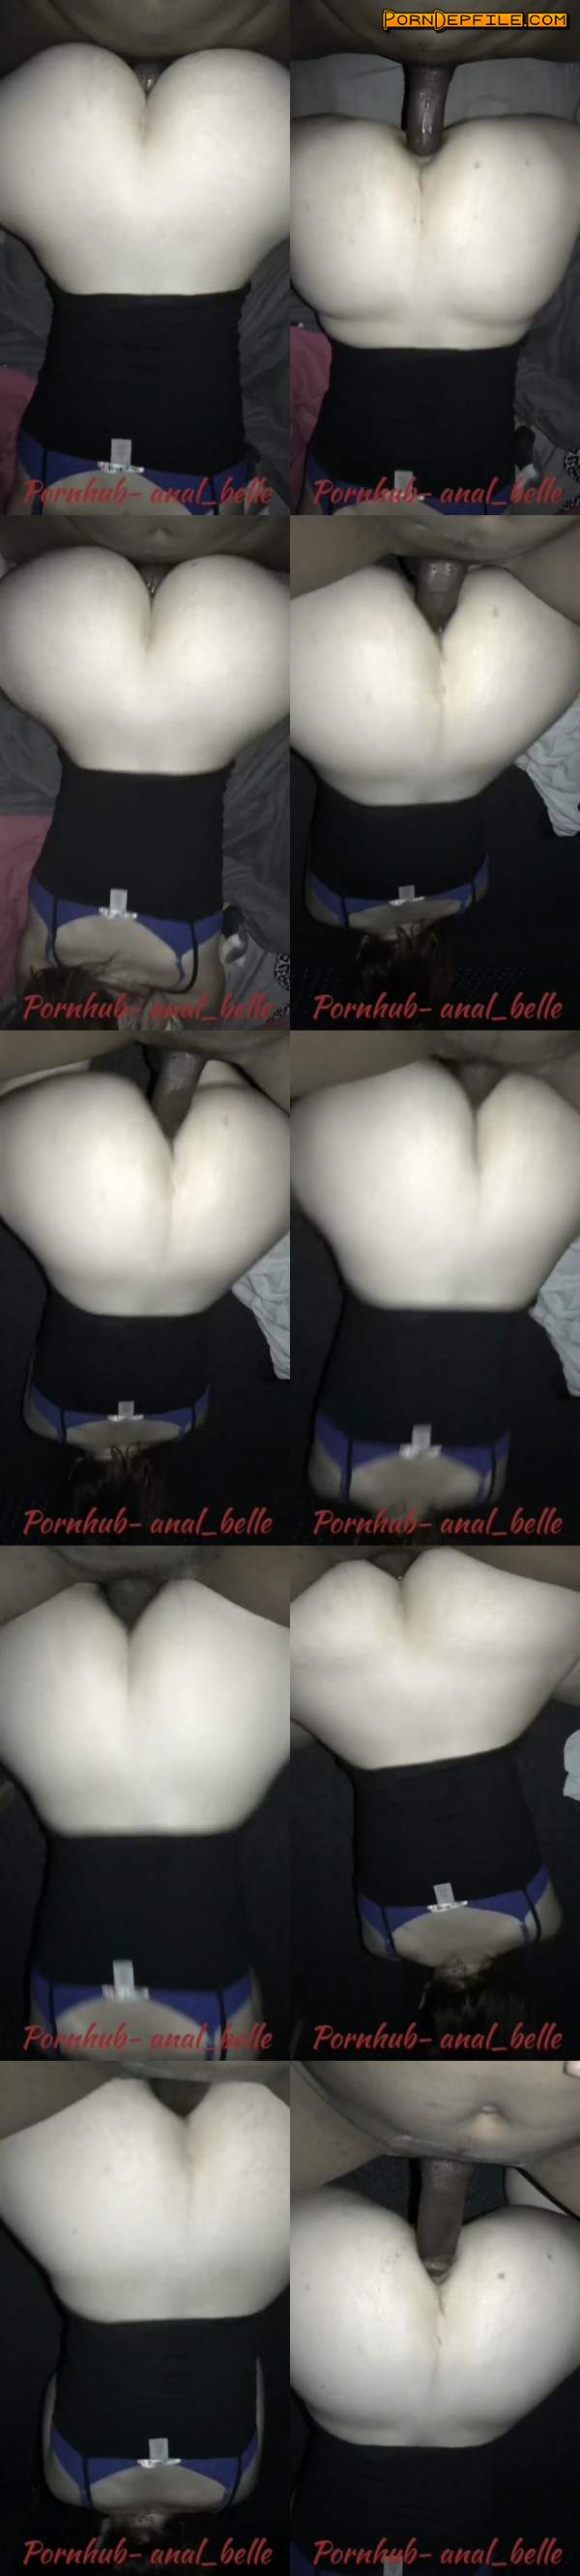 Pornhub, anal_belle: Using Him As A Butt Plug  Add Me: Instagram - 3XoticAF (Amateur, Teen, Interracial, Anal) 1080p